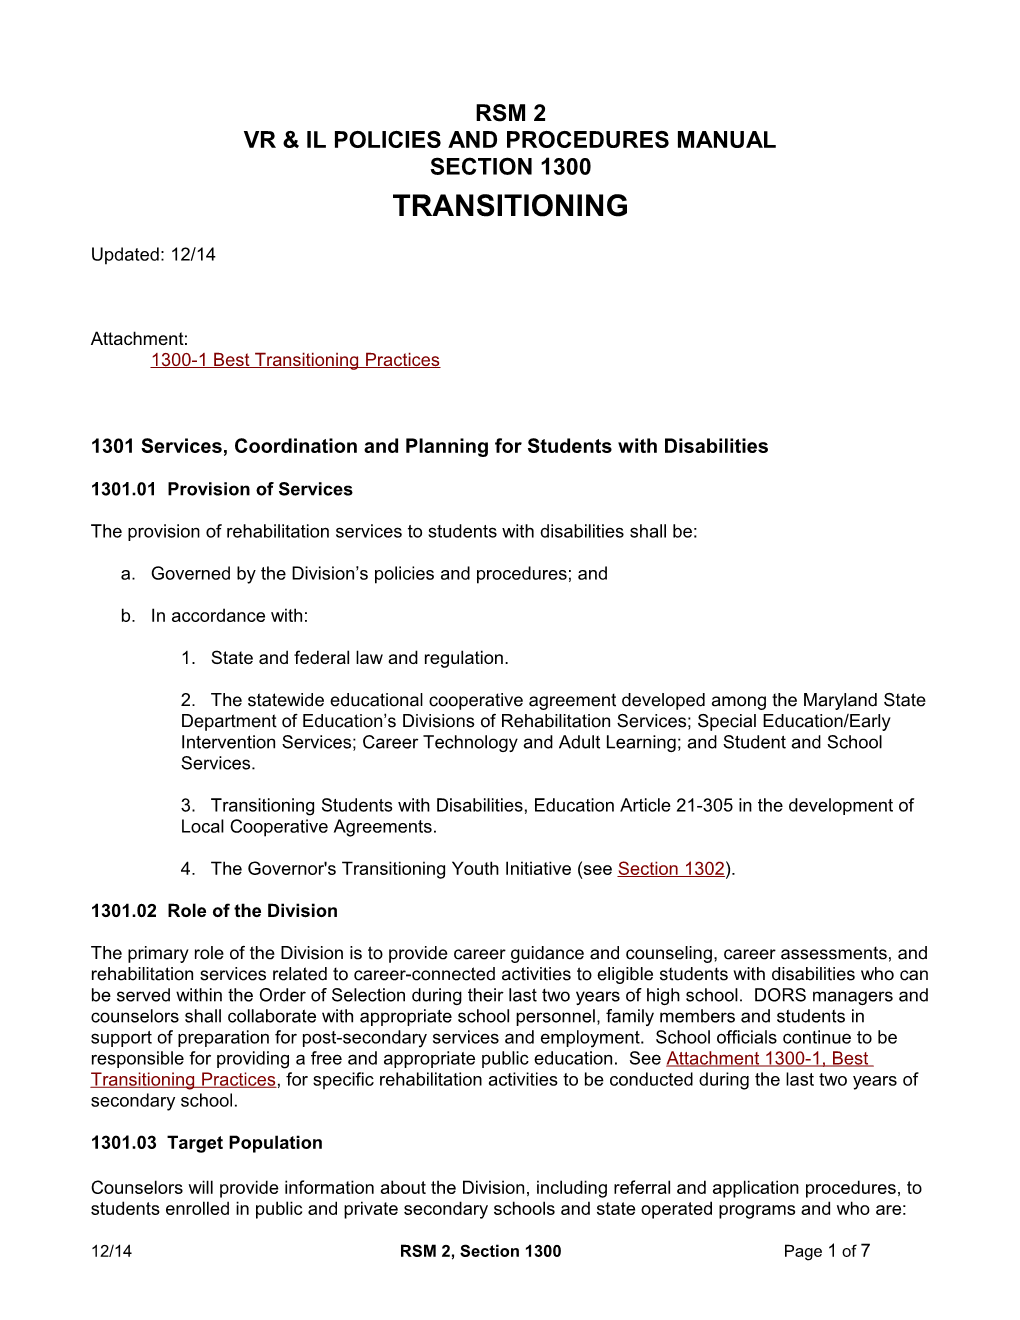 RSM 2, Section 1300: Transitioning